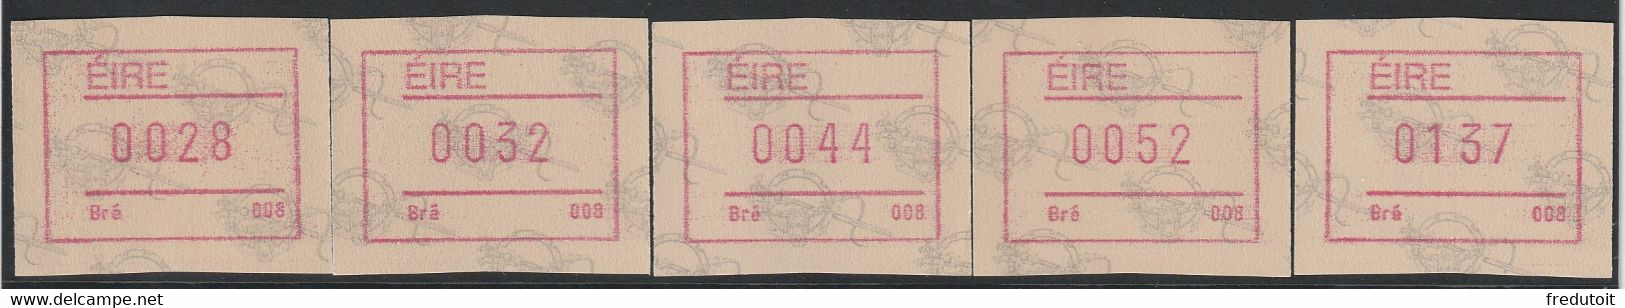 IRLANDE - Timbres Distributeurs / FRAMA  ATM - N°4** (1992) Bré 008 - Automatenmarken (Frama)